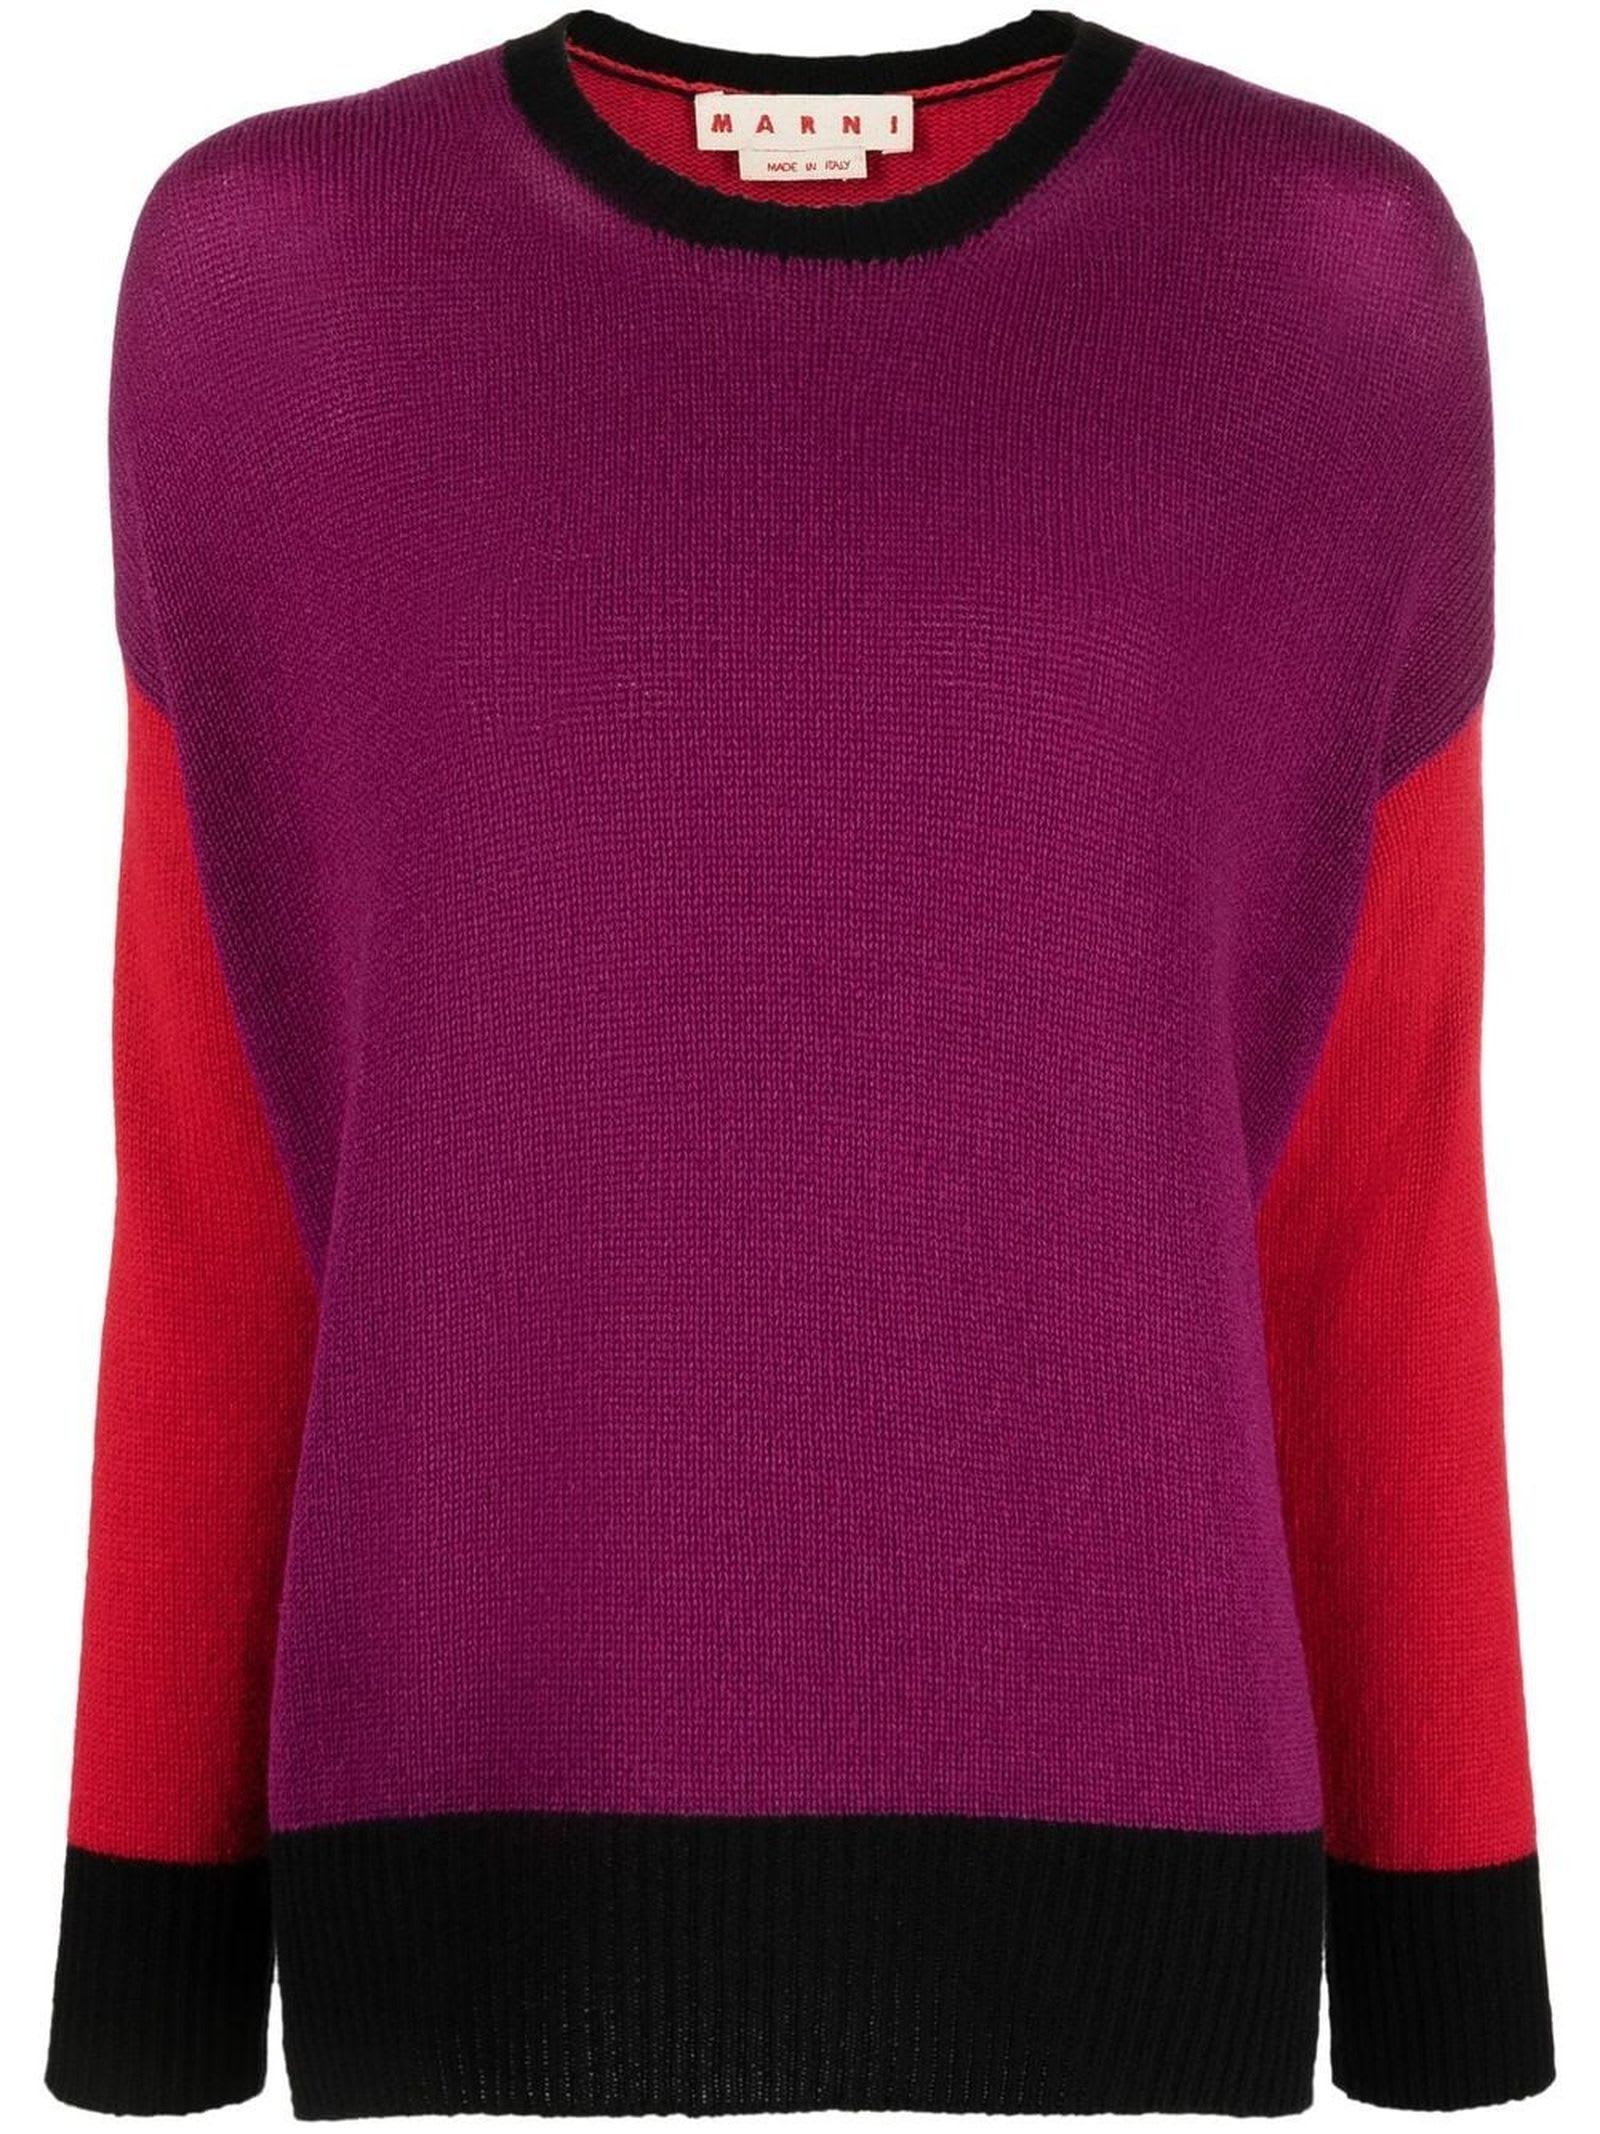 Marni Pink Cashmere Crewneck Sweater